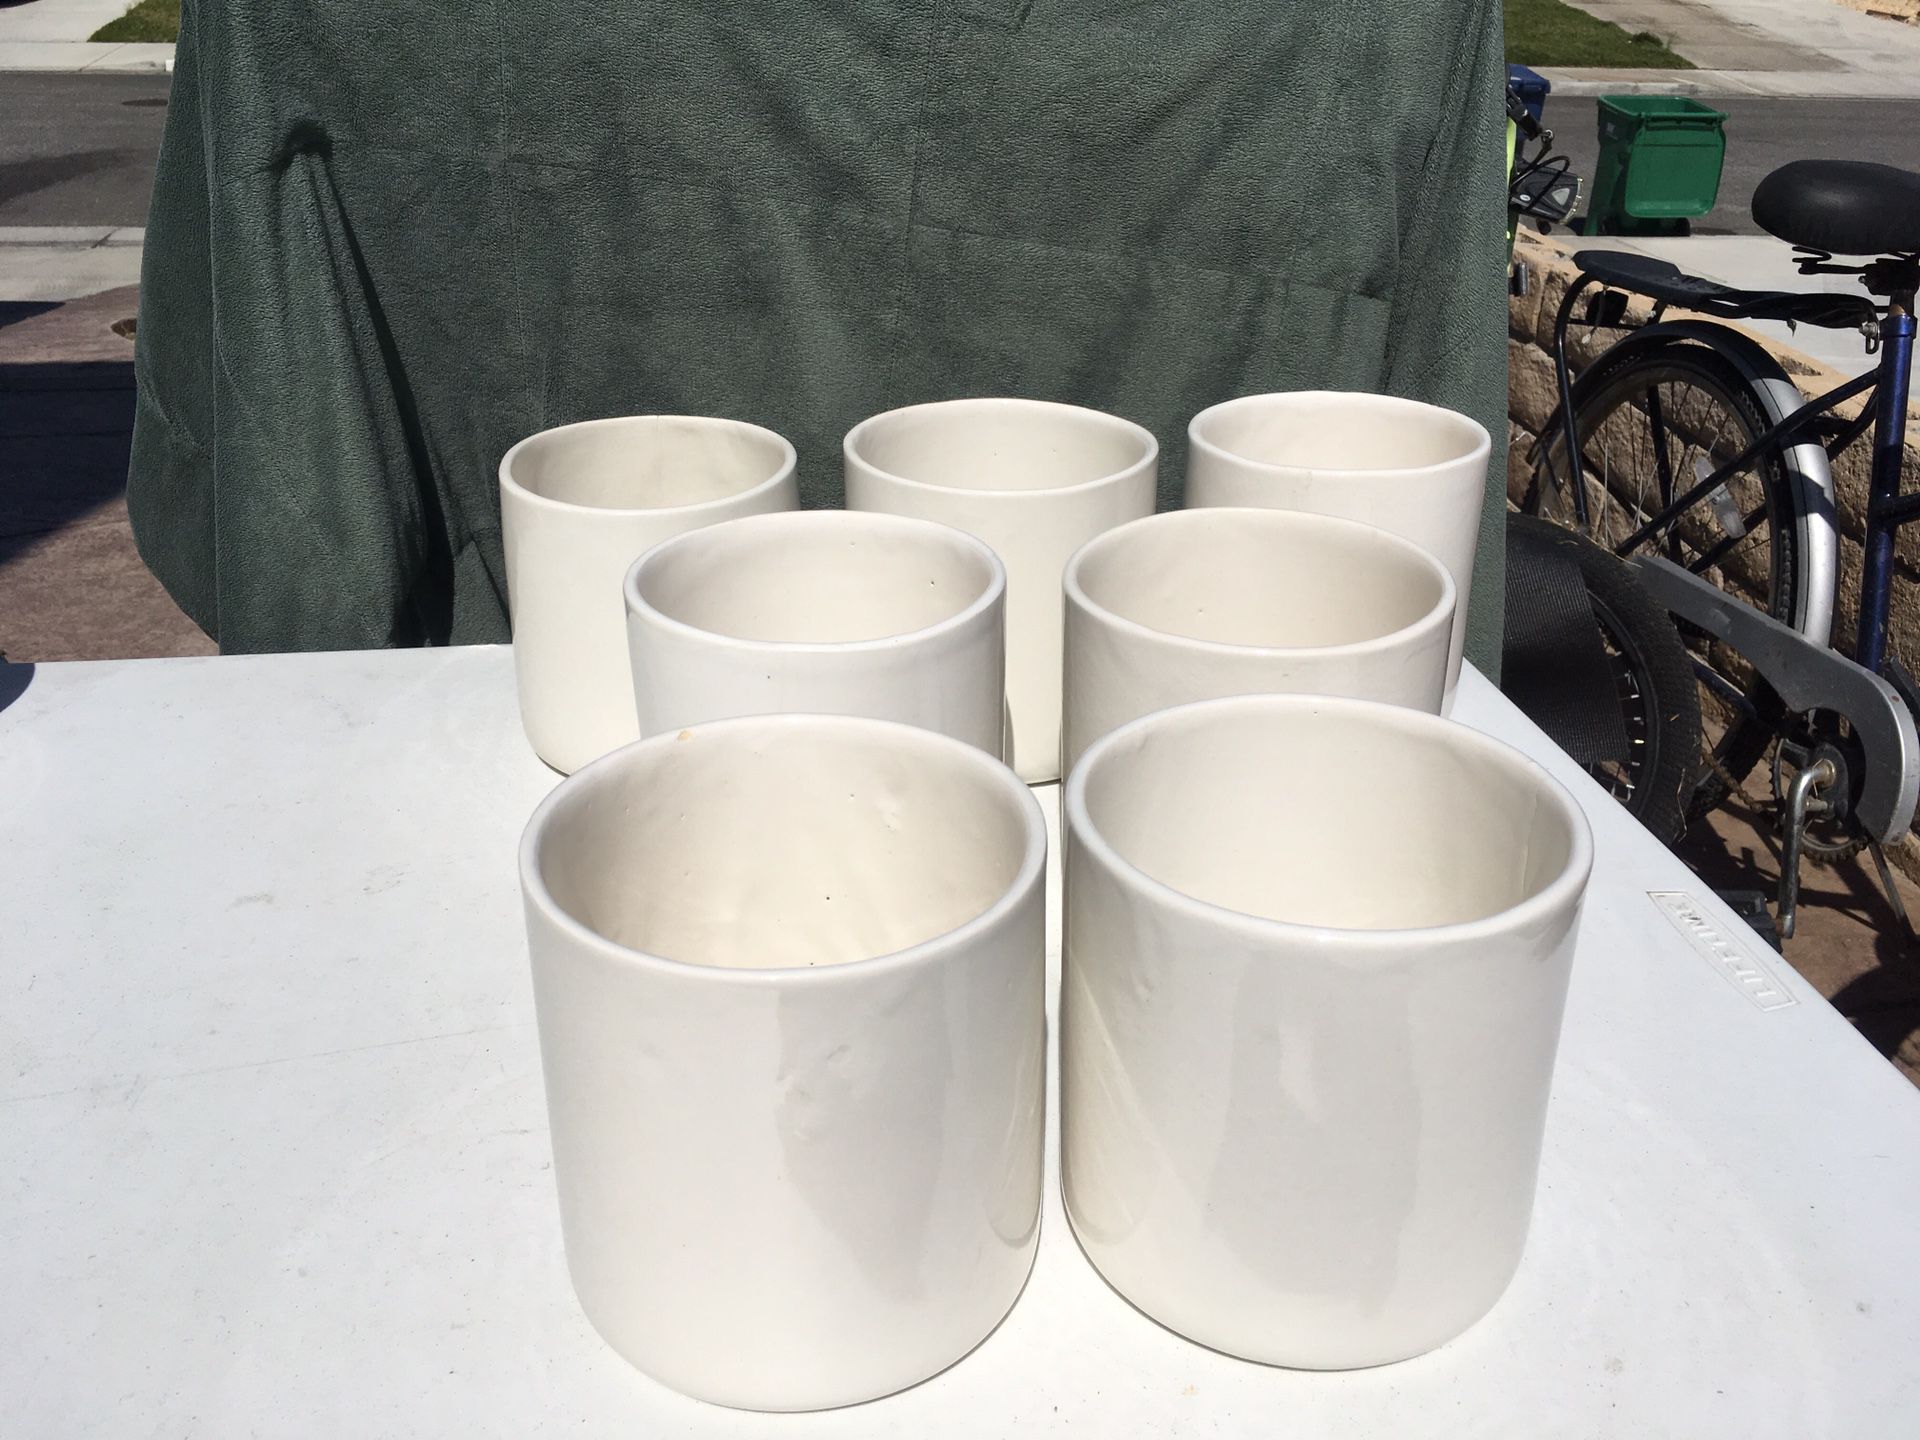 Ceramic Planter Pots, Succulent Cactus Plant White Cylindrical Containers,5”W X 5 1/2”H $4. Ea